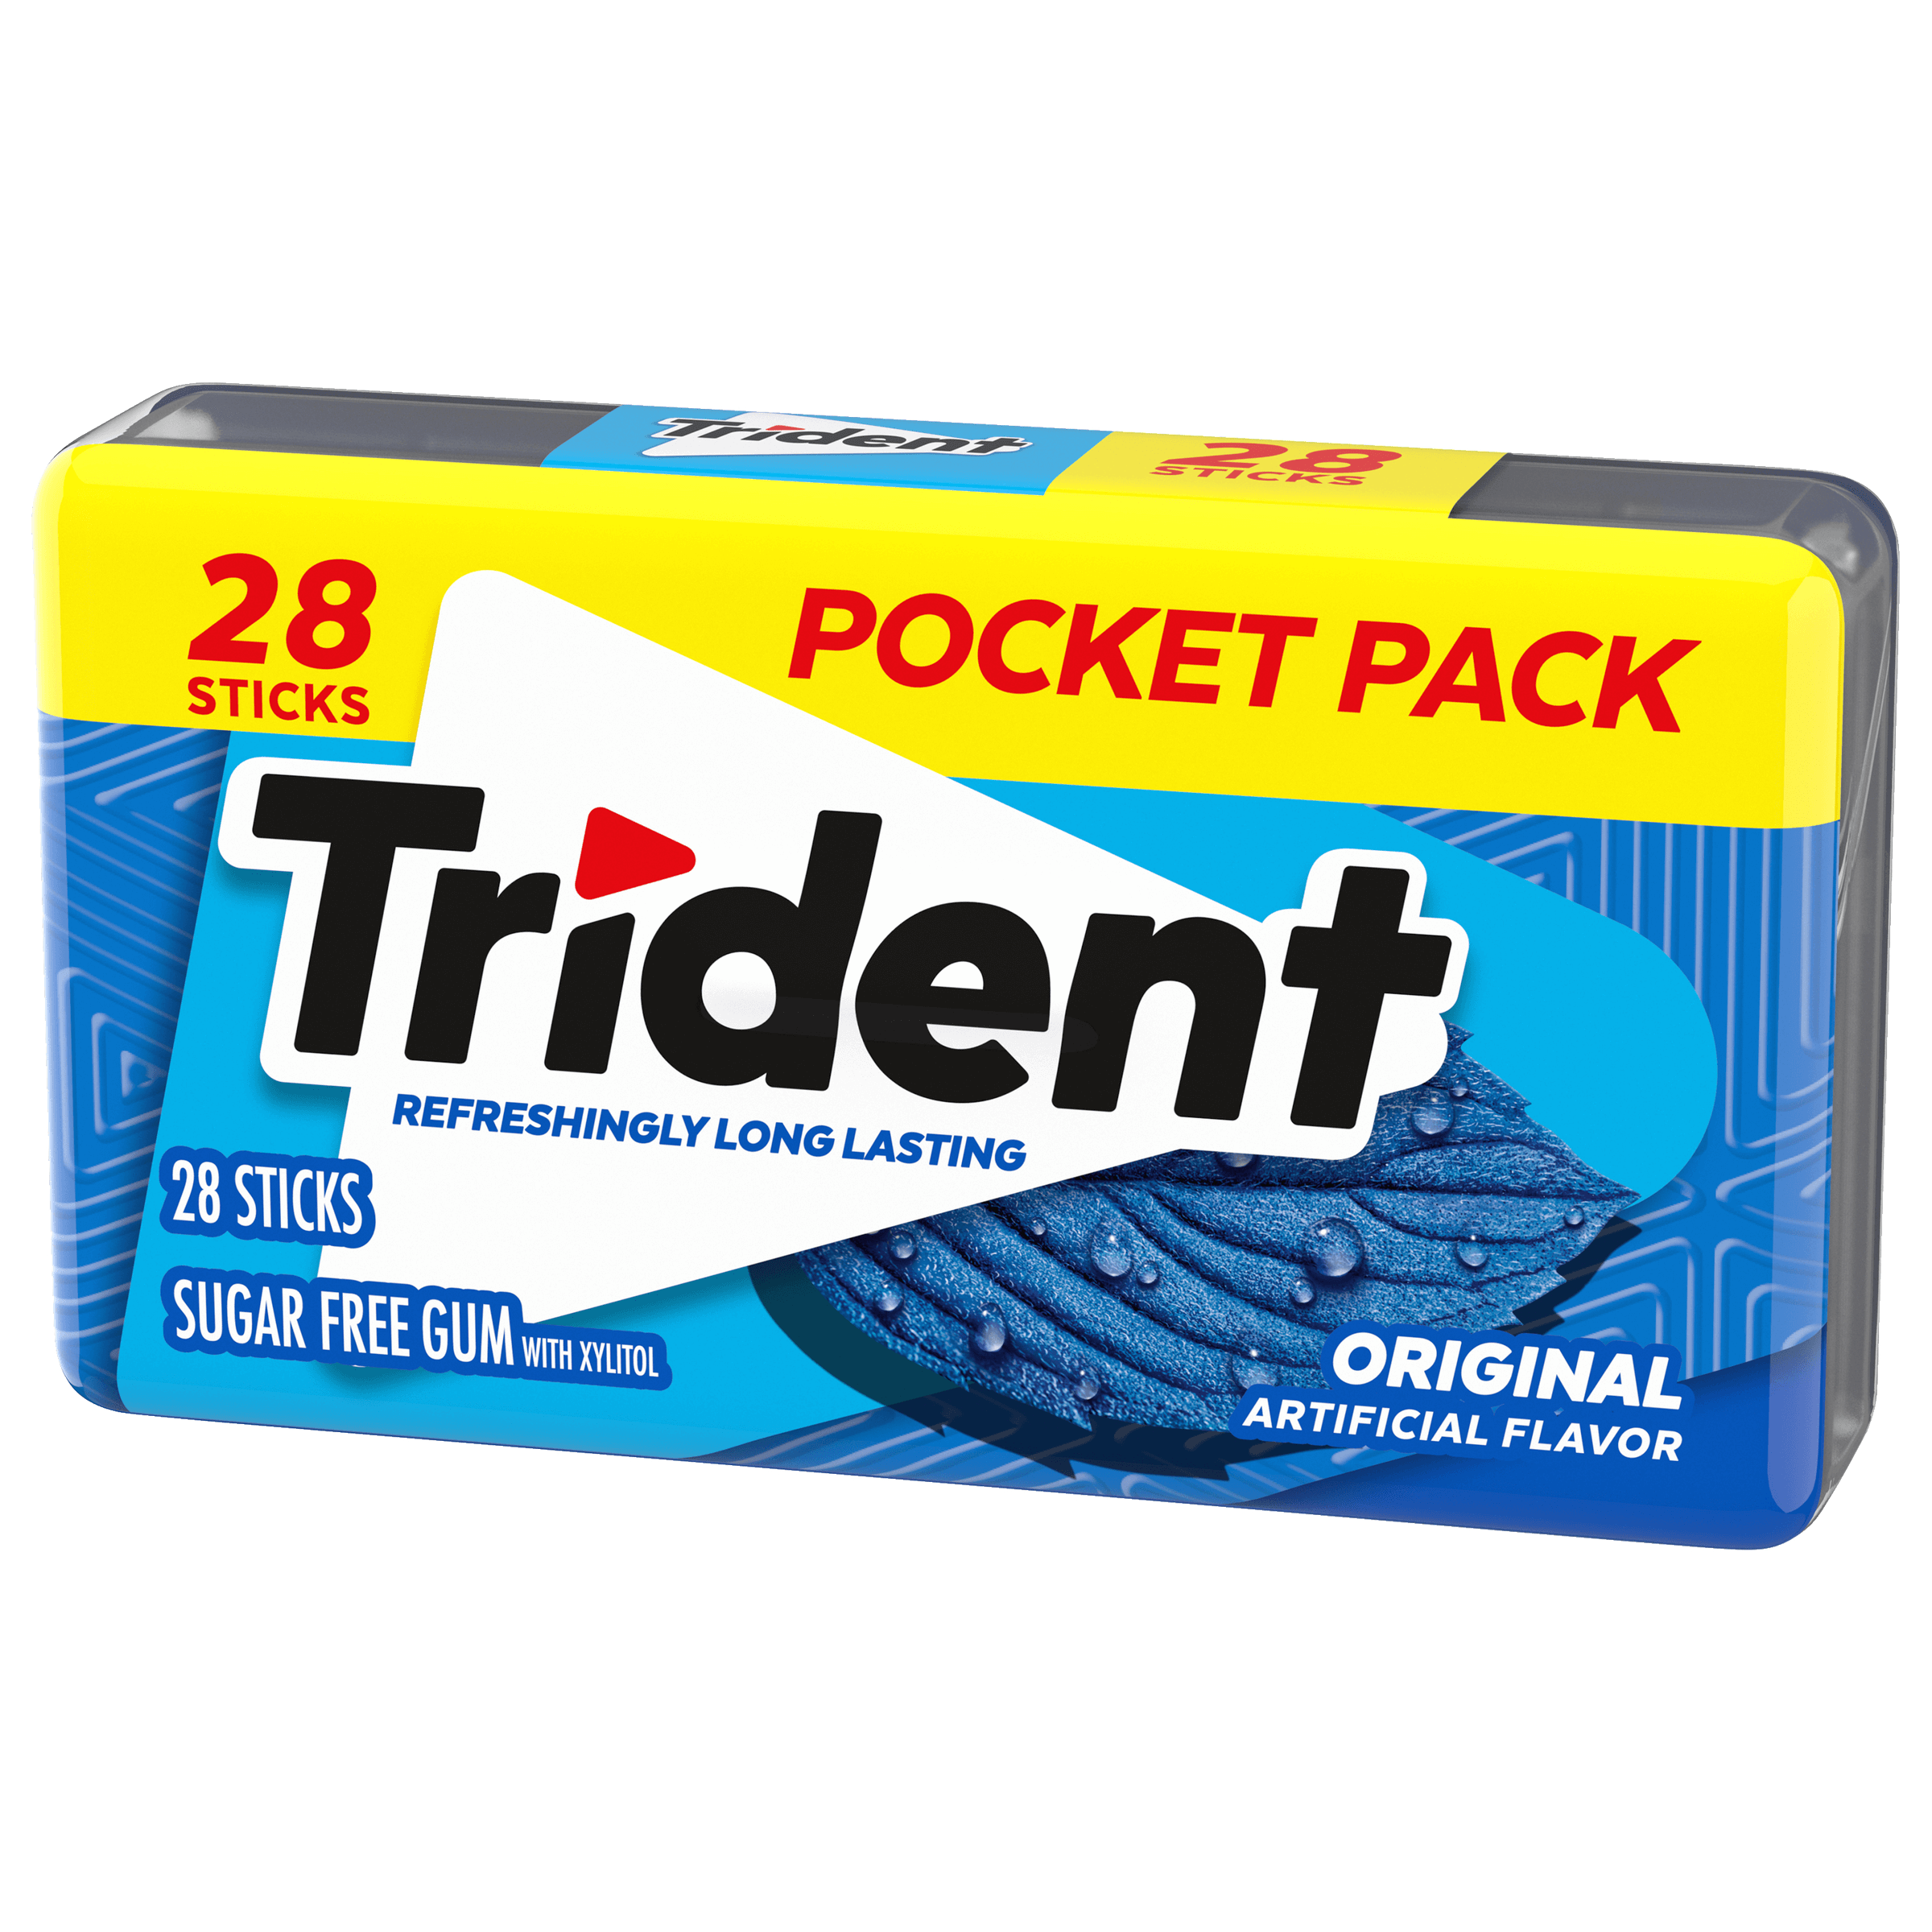 Trident Original - Pocket Pack (28 pieces)